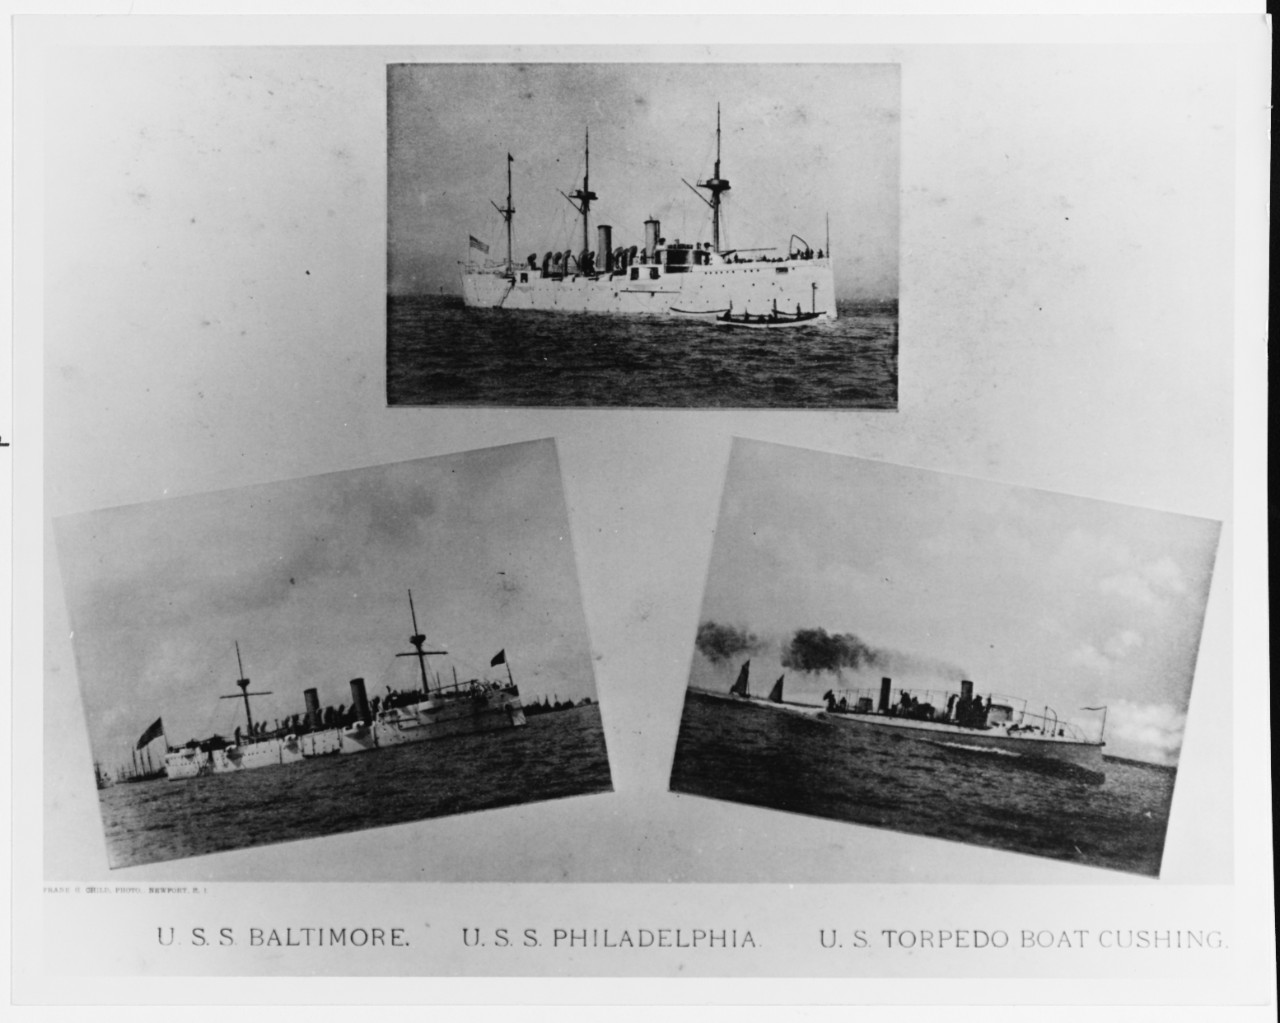 USS BALTIMORE; USS PHILADELPHIA; U.S.T.B. CUSHING.